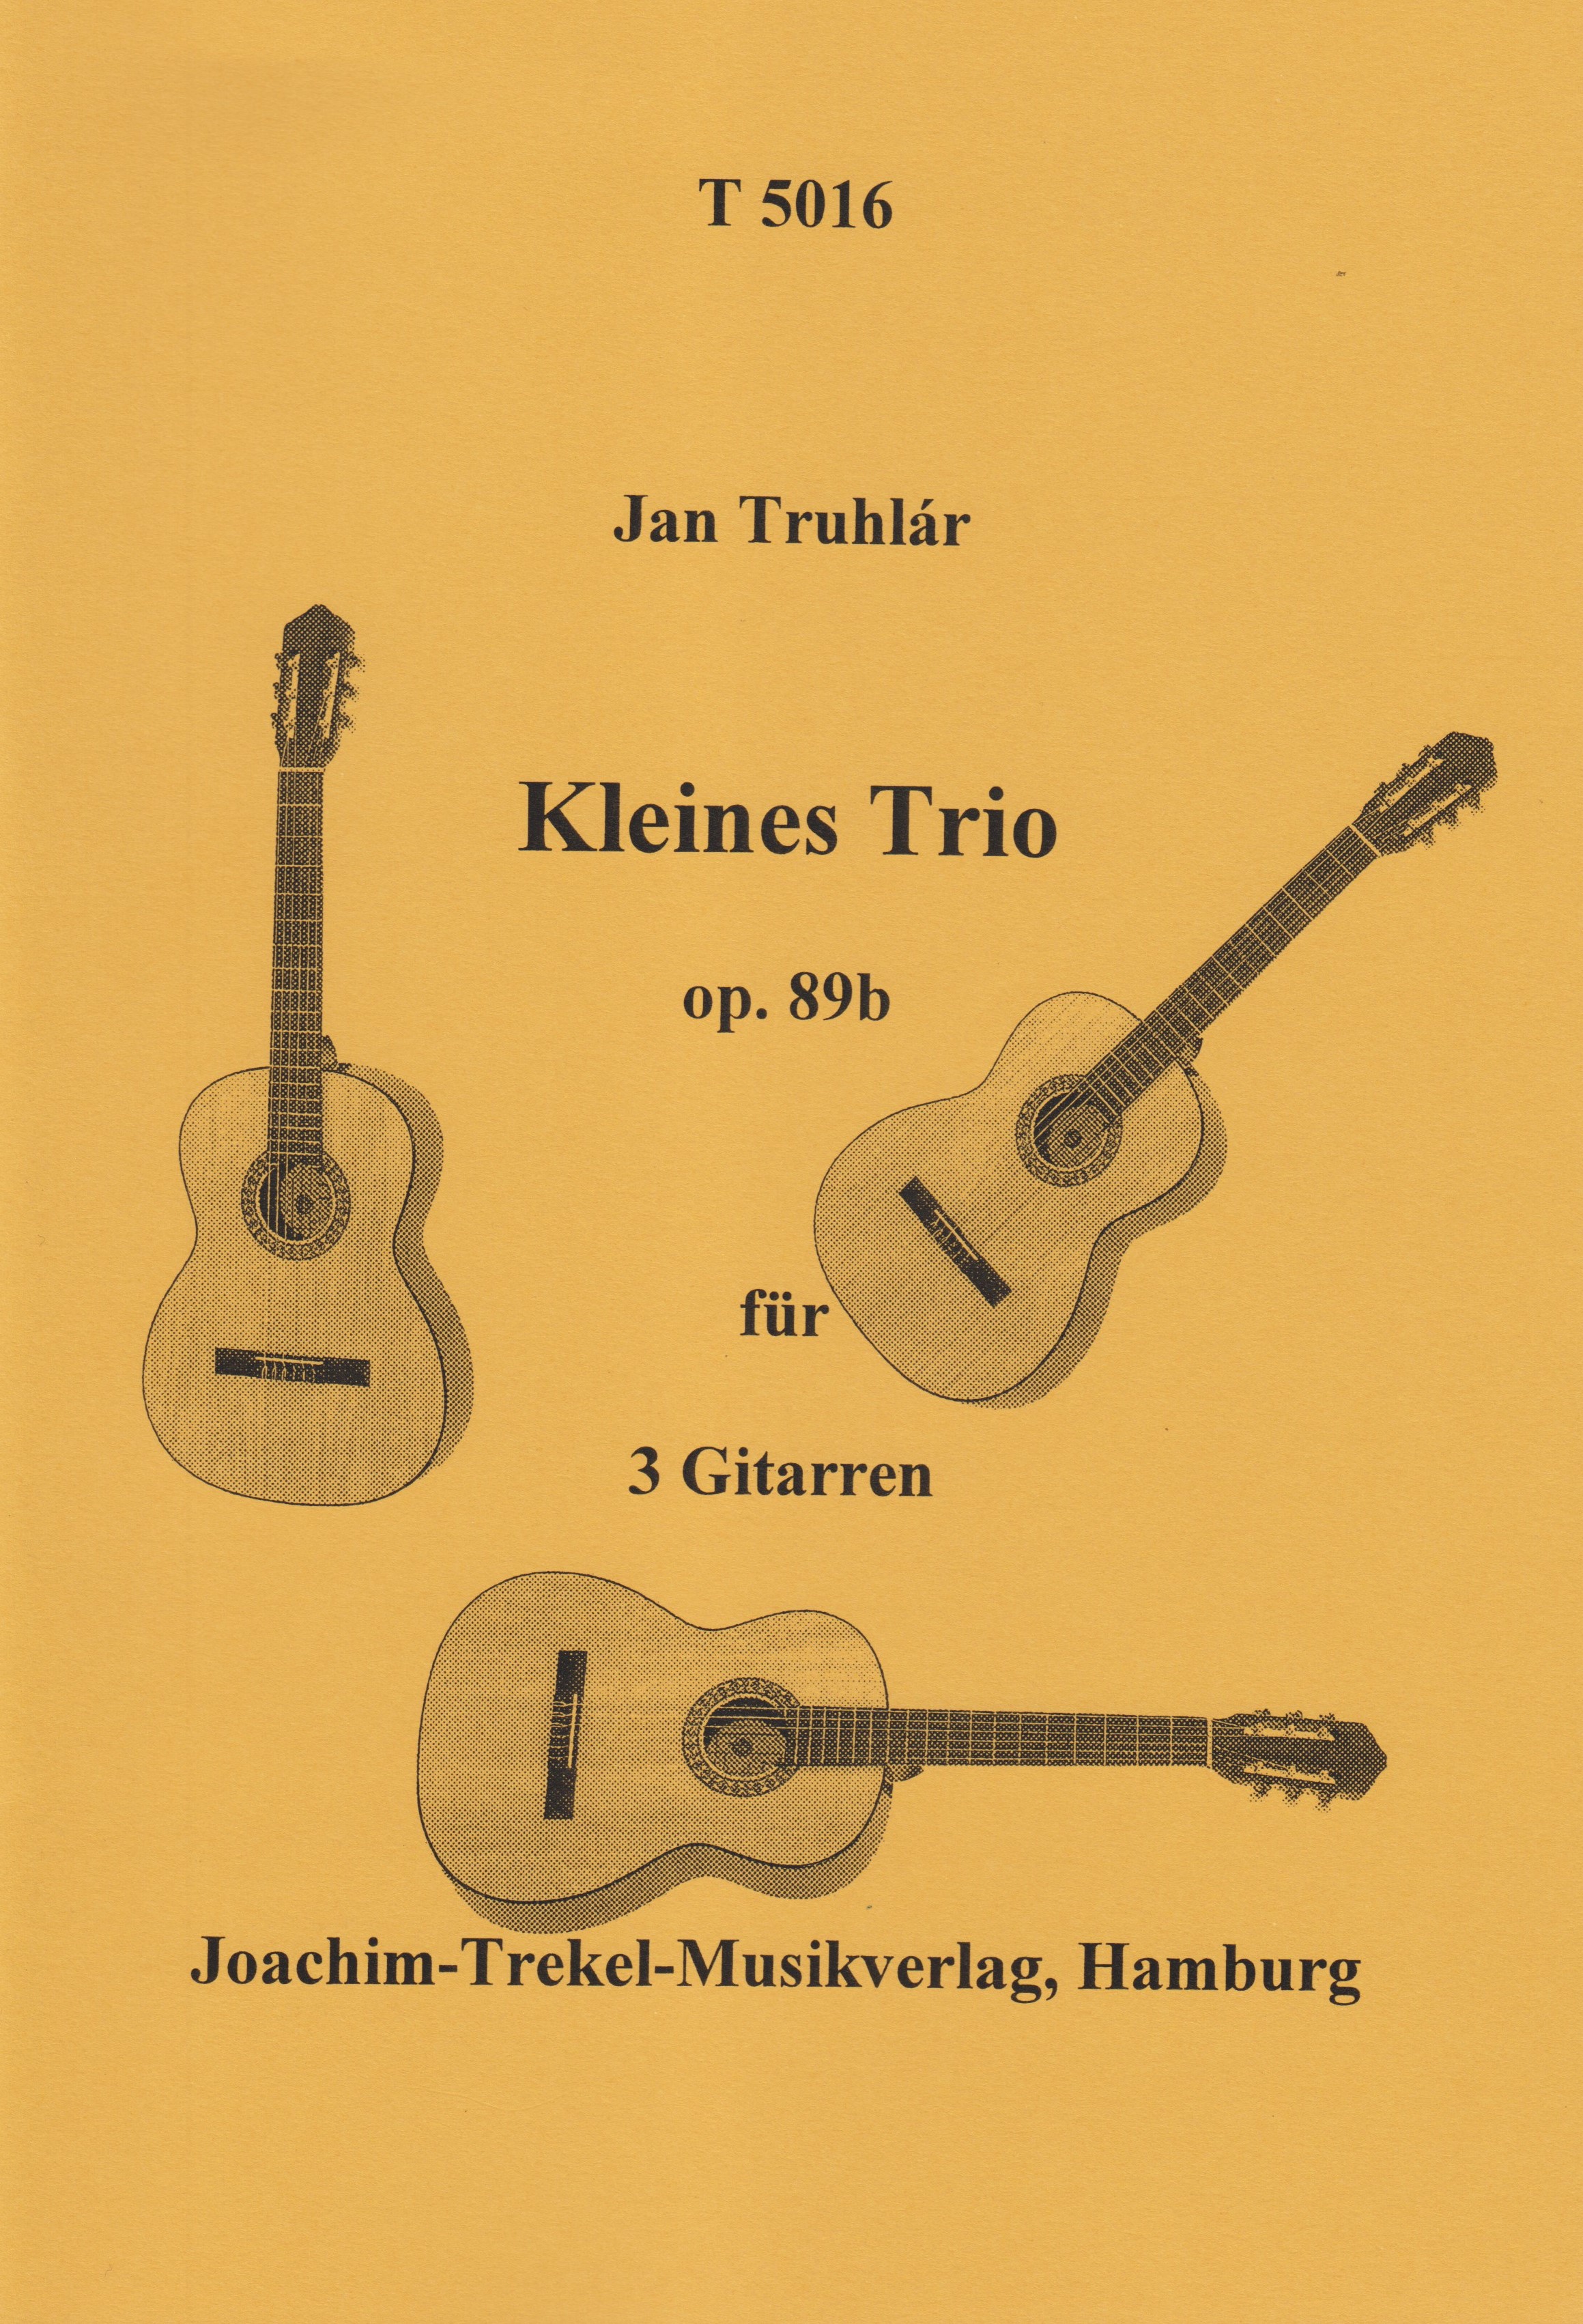 Kleines Trio op. 89b